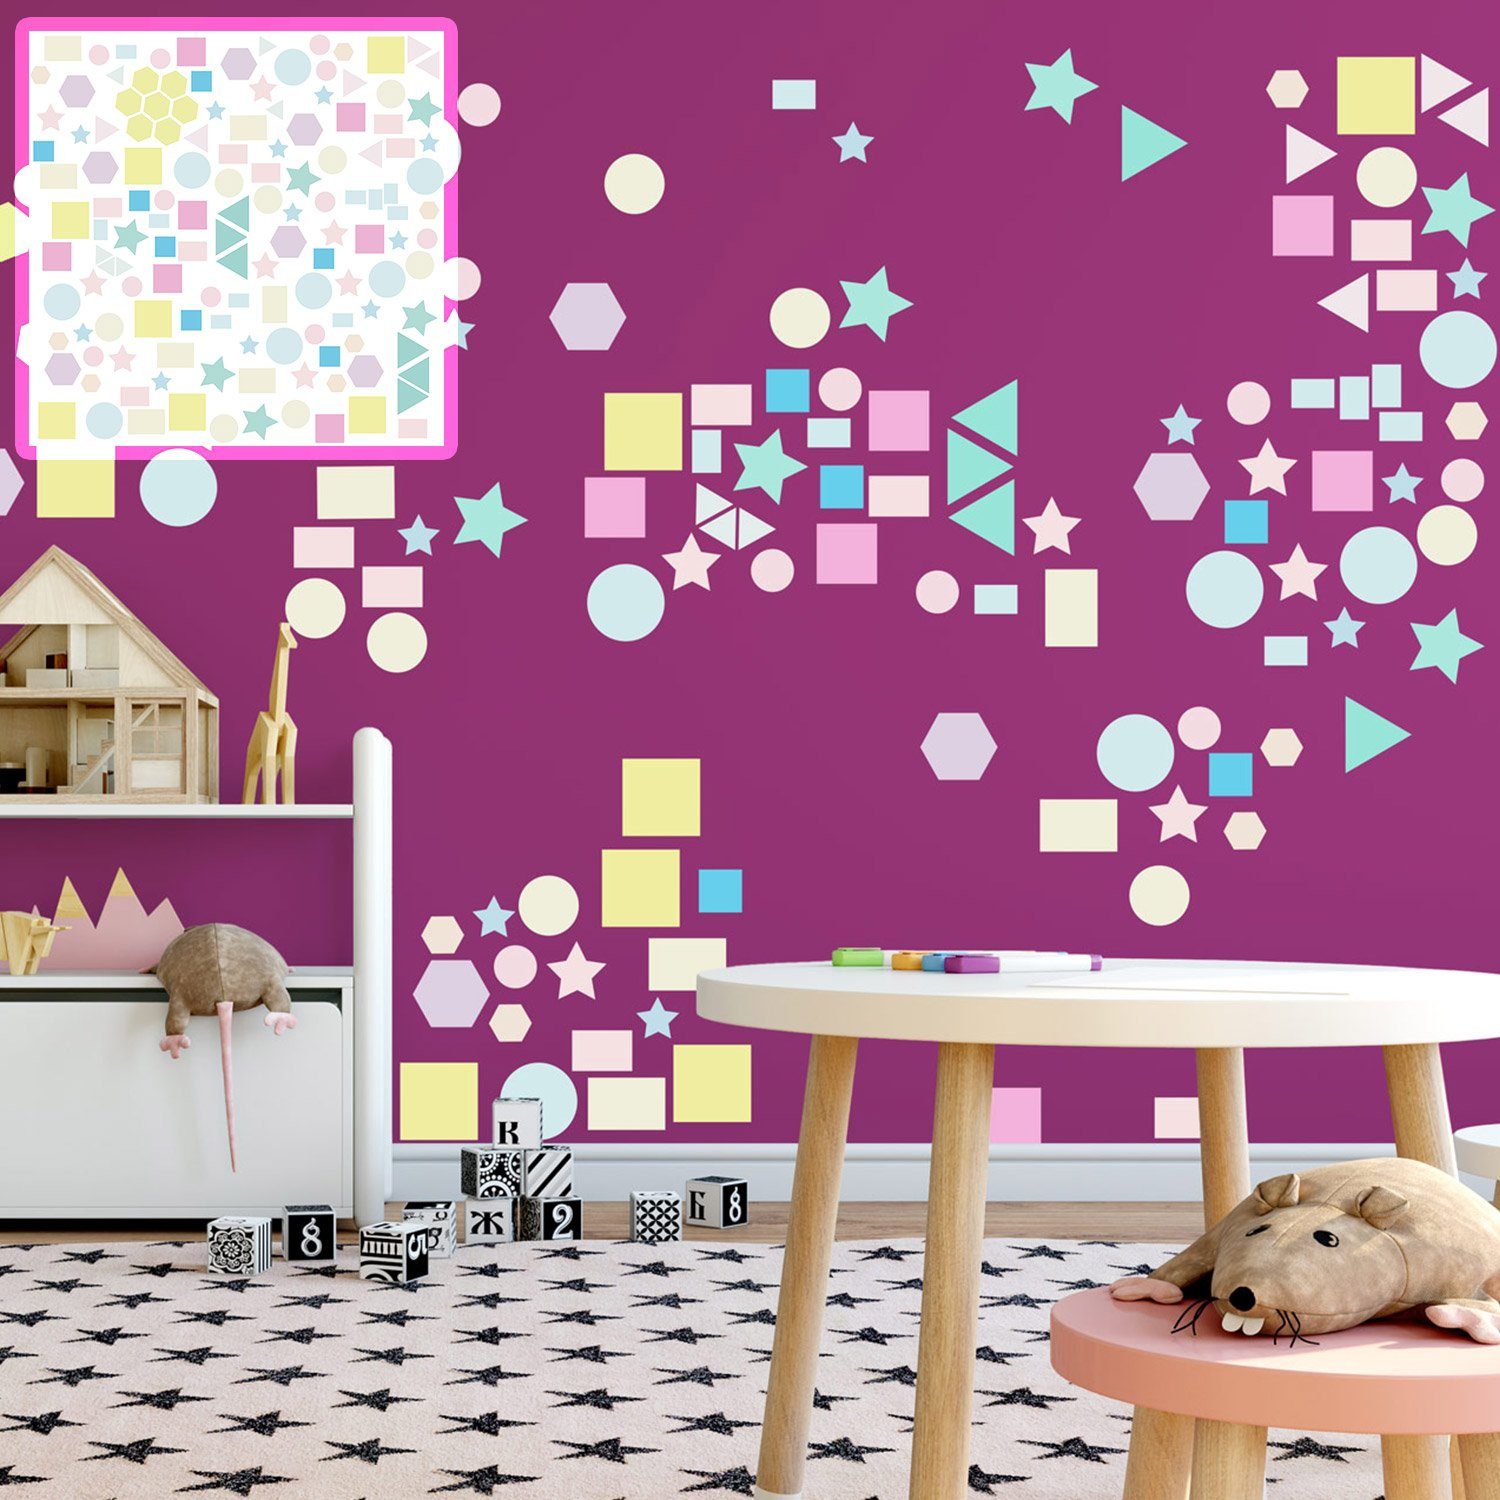 Sunnywall Wandtattoo XXL Wandtattoo Geometrische Formen Set verschiedene Motive, Kinderzimmer Aufkleber bunt Wanddeko pastell